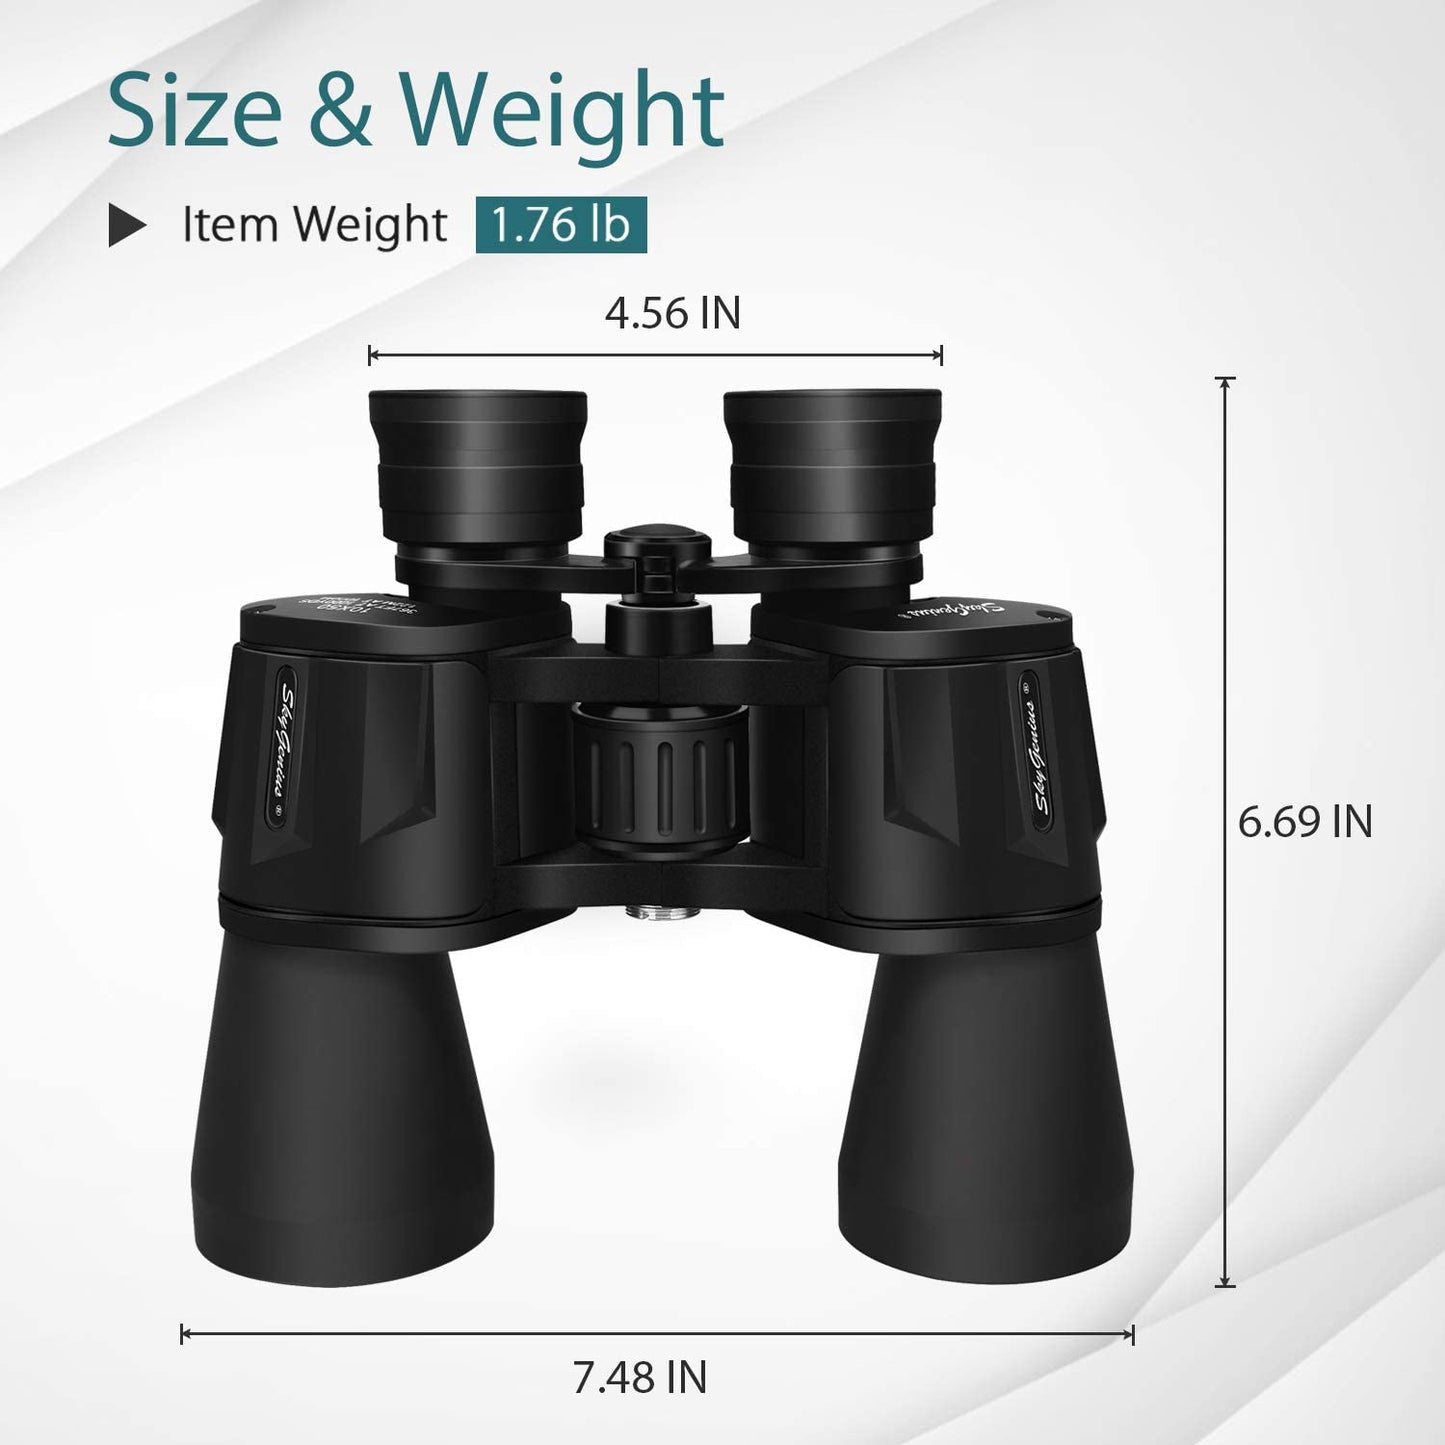 10 x 50 Binoculars for Adults Full-Size, Black